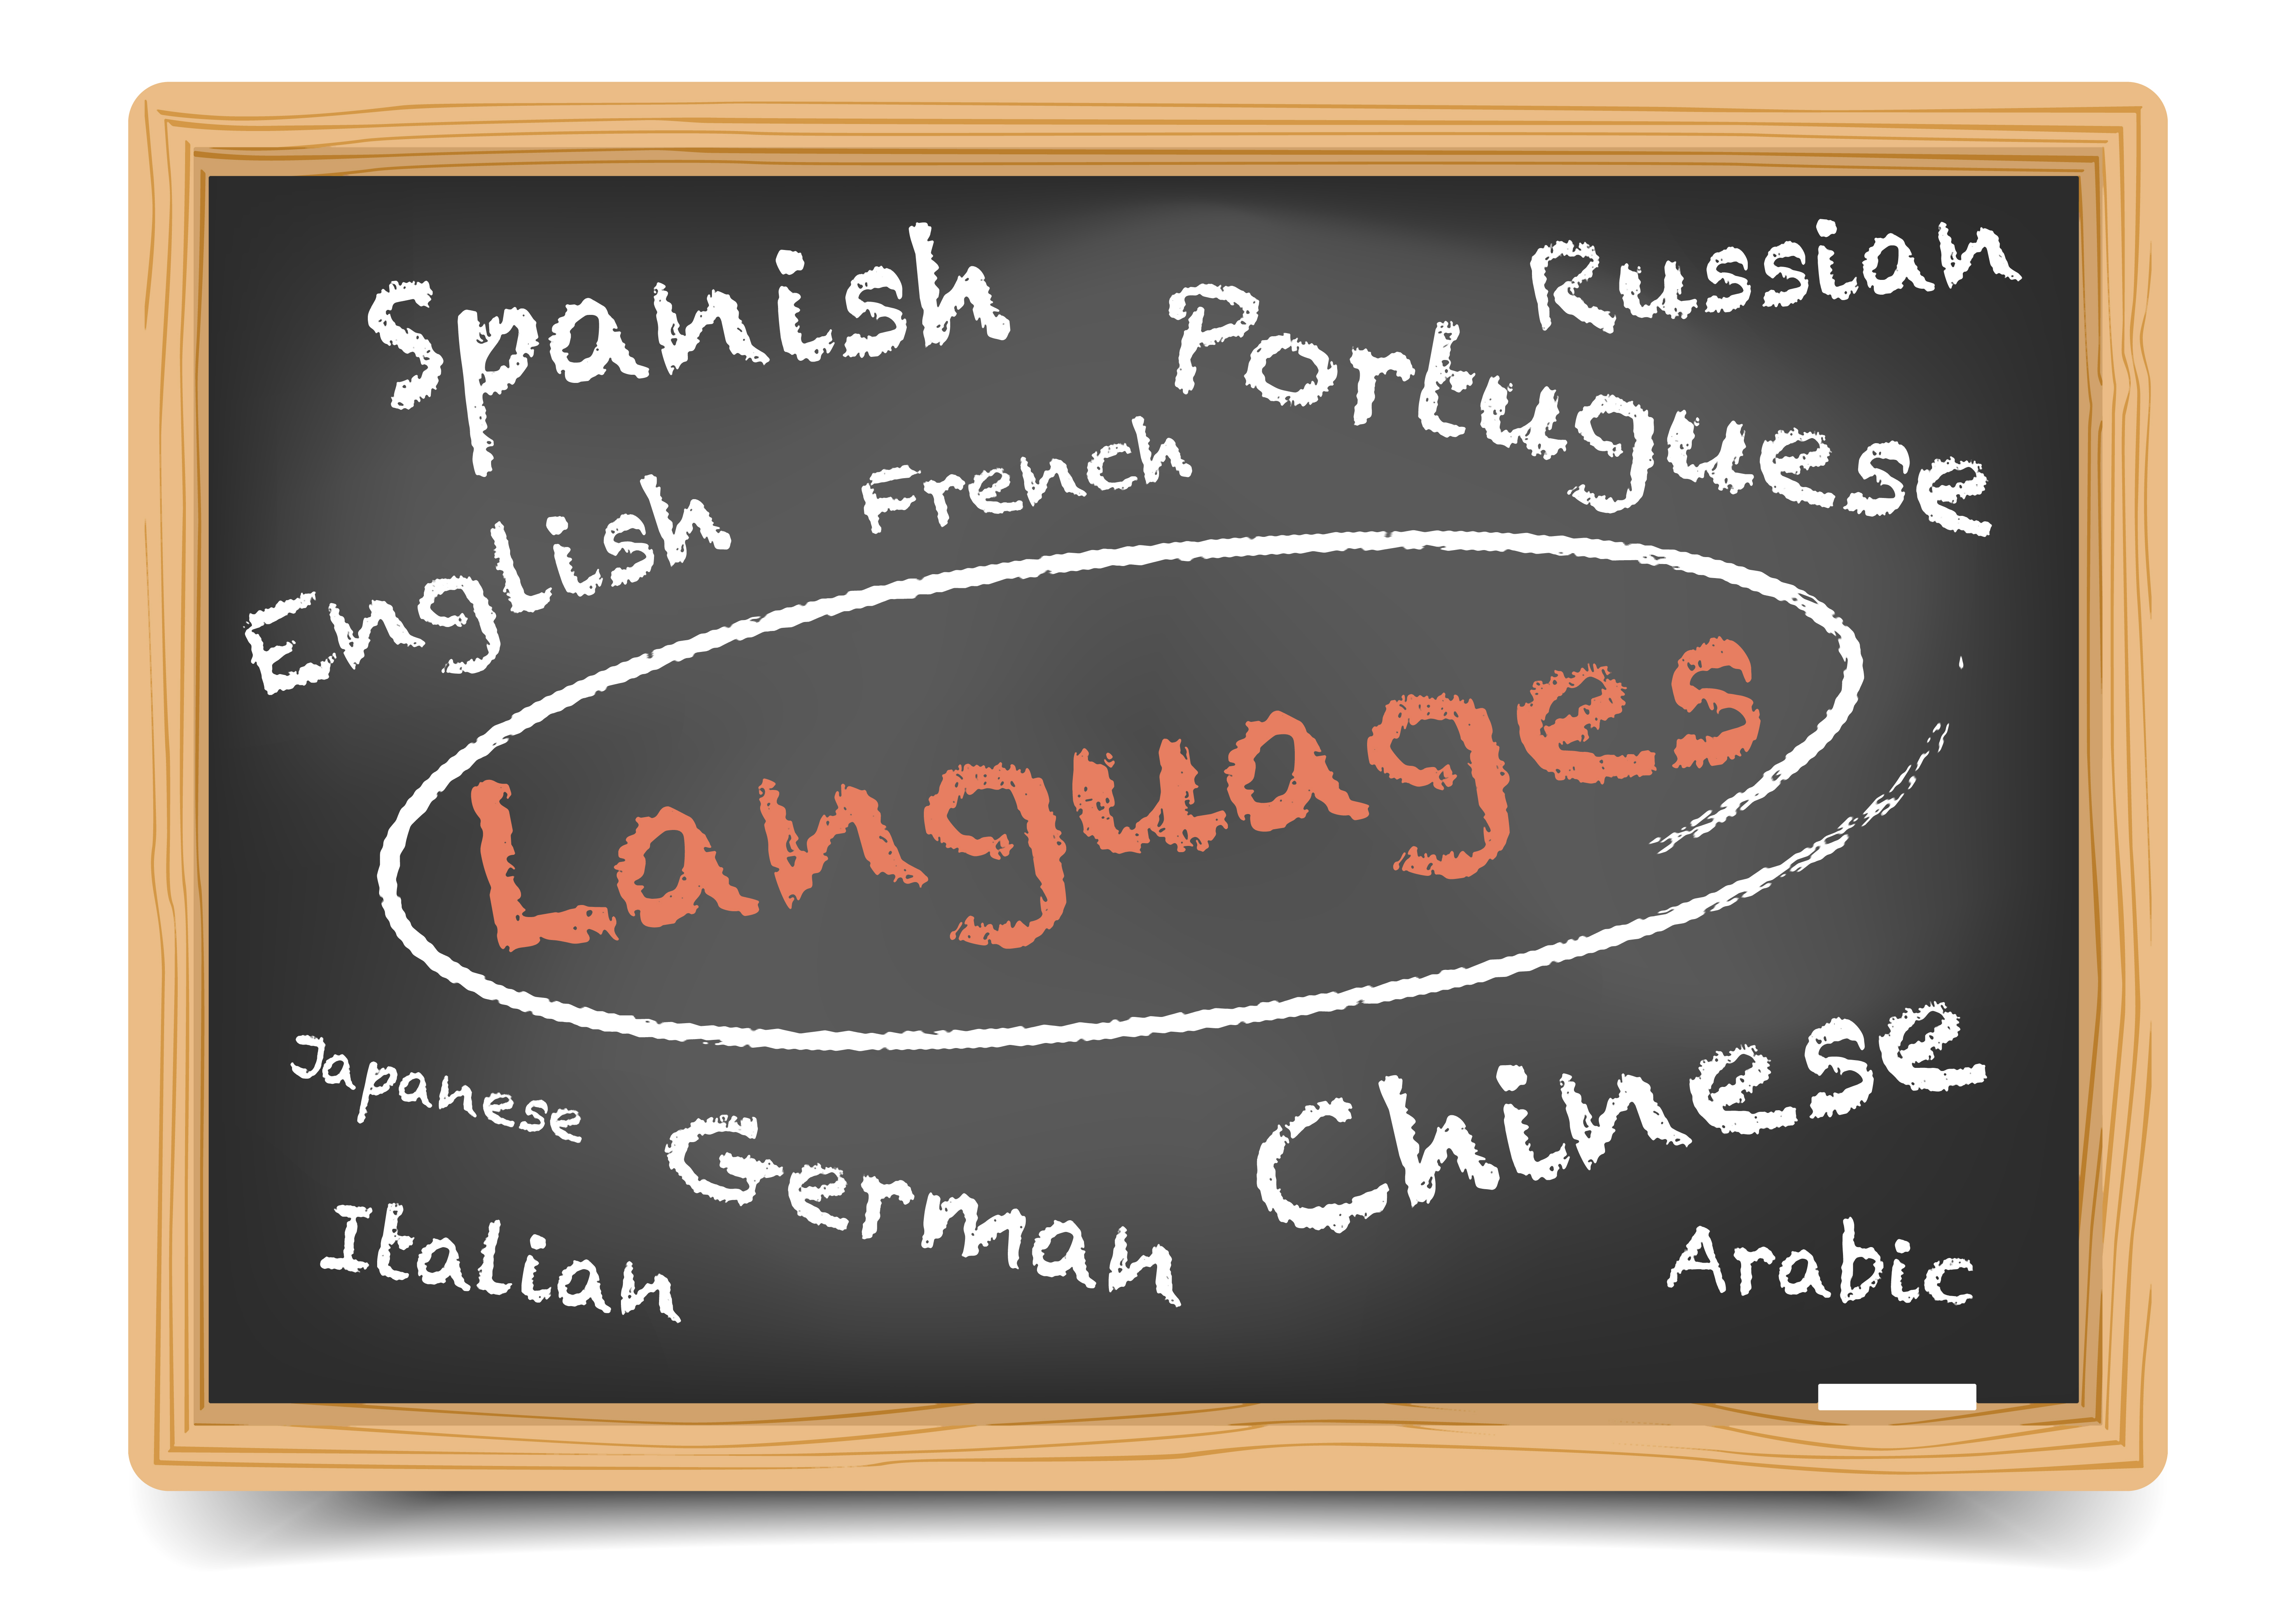 New eWorkshop "Scaffolding English Language Arts Instruction for Emergent Bilingual students"